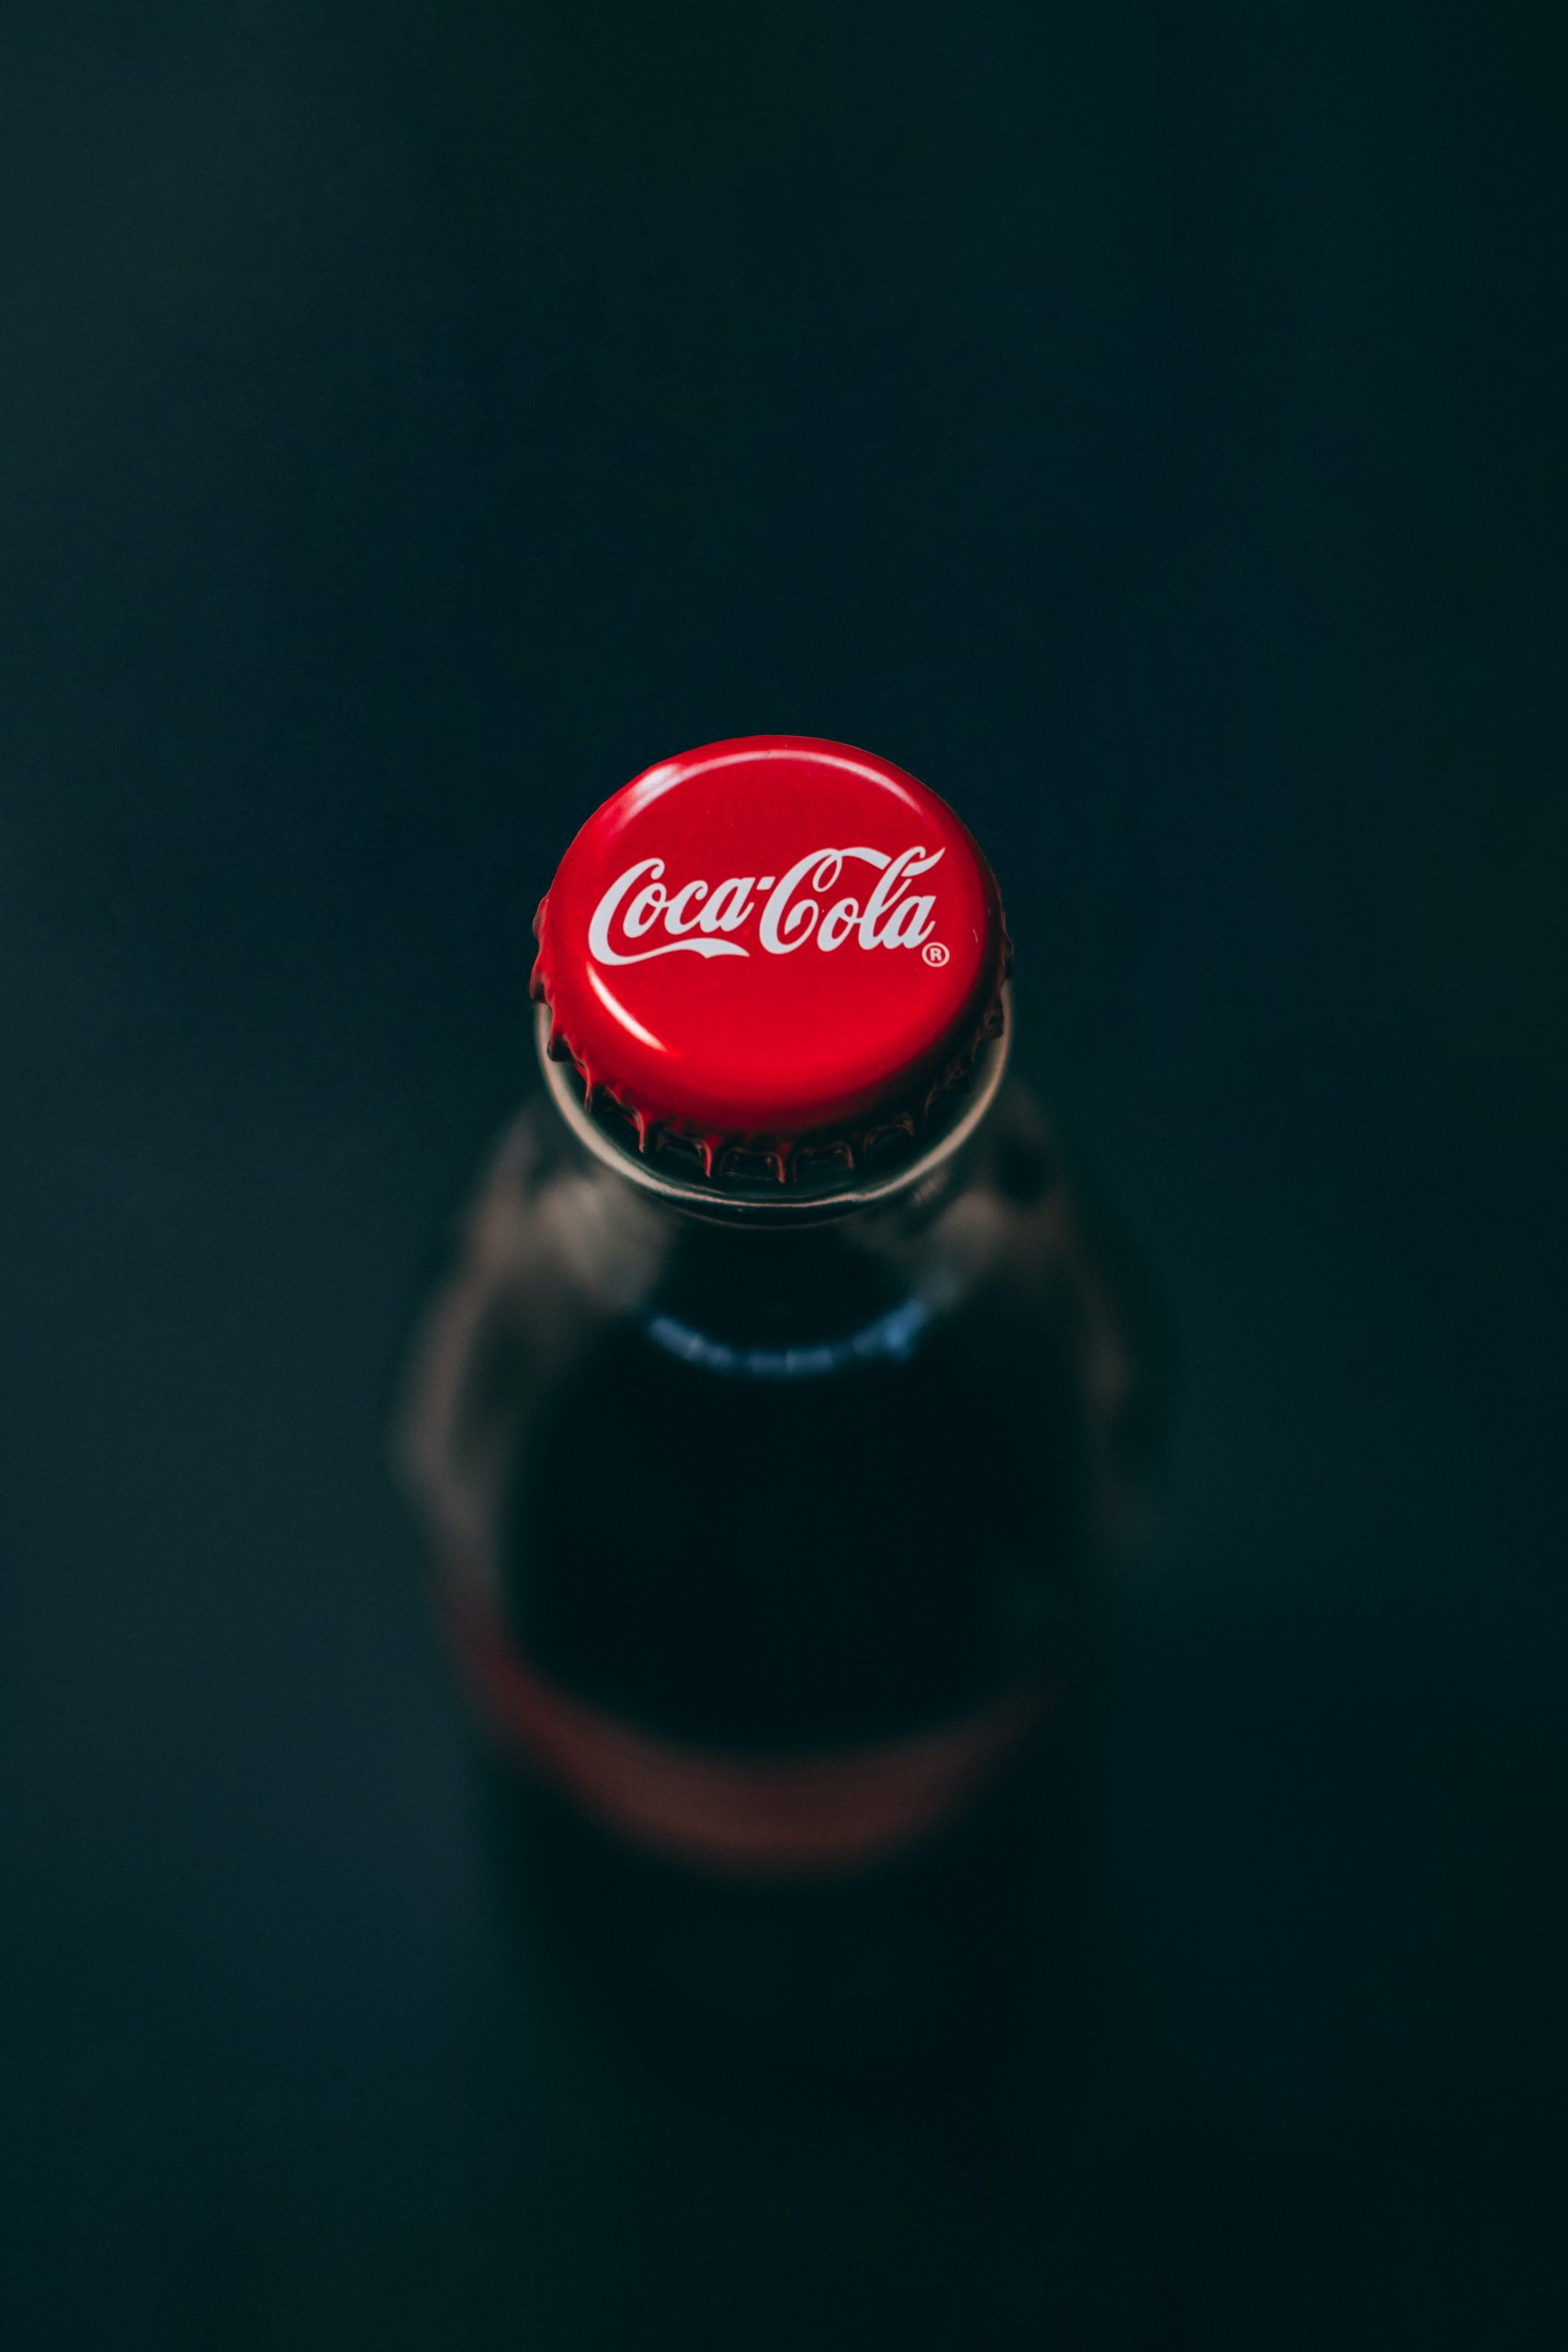  The European Coca-Cola bottler appears to be facing a liquidity crisis!